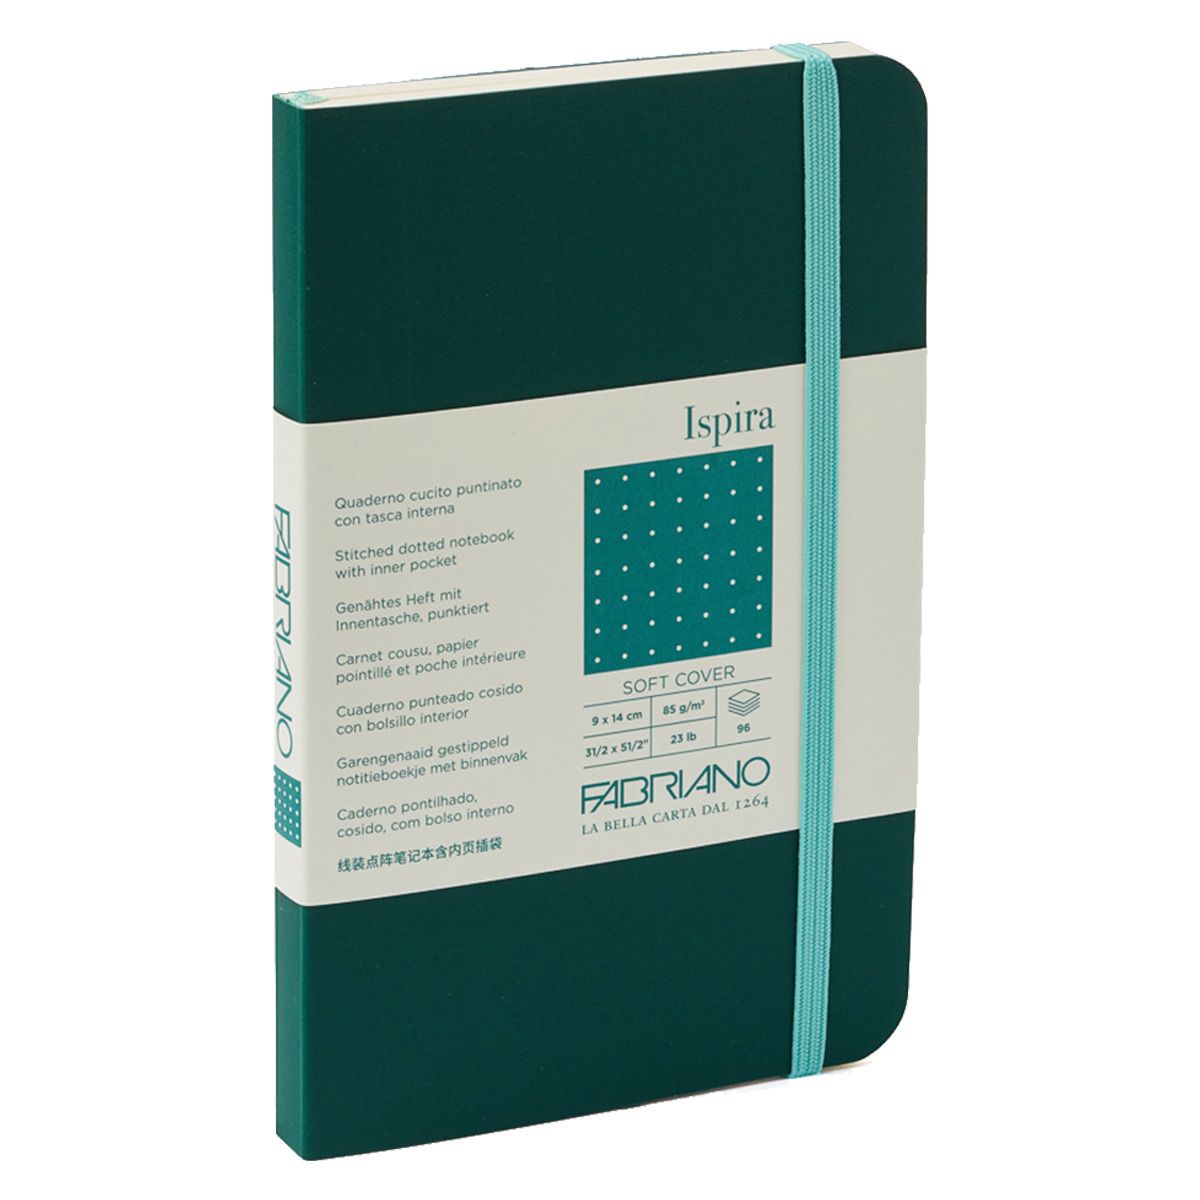 Fabriano Ispira Notebooks 3.5 x 5.5 Dot Grid Softbound (96-Sheets) Green 